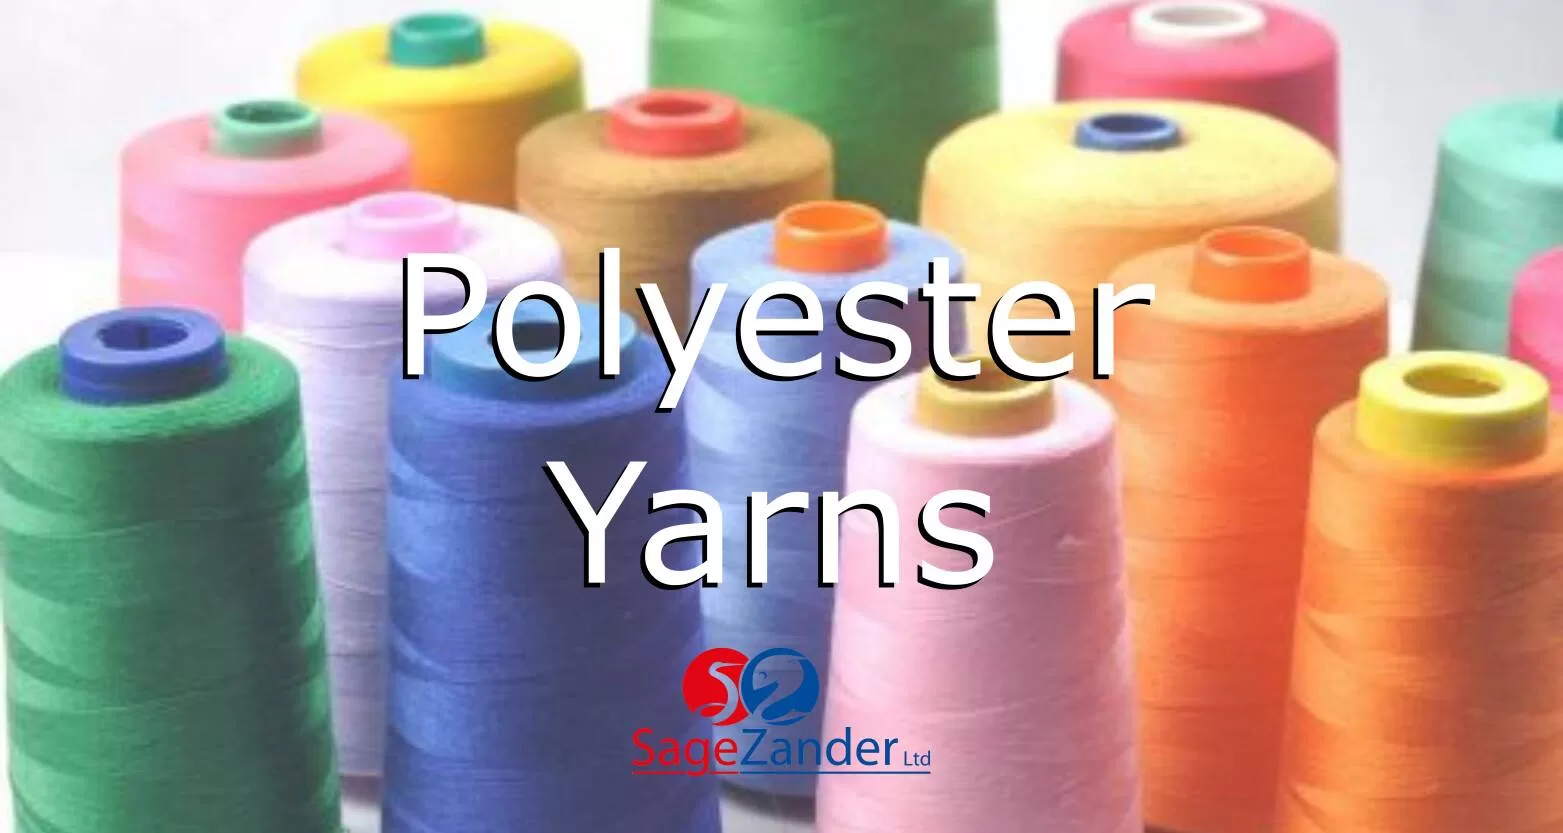 Polyester Yarn - Yarn Wholesale UK Supplier - SageZander